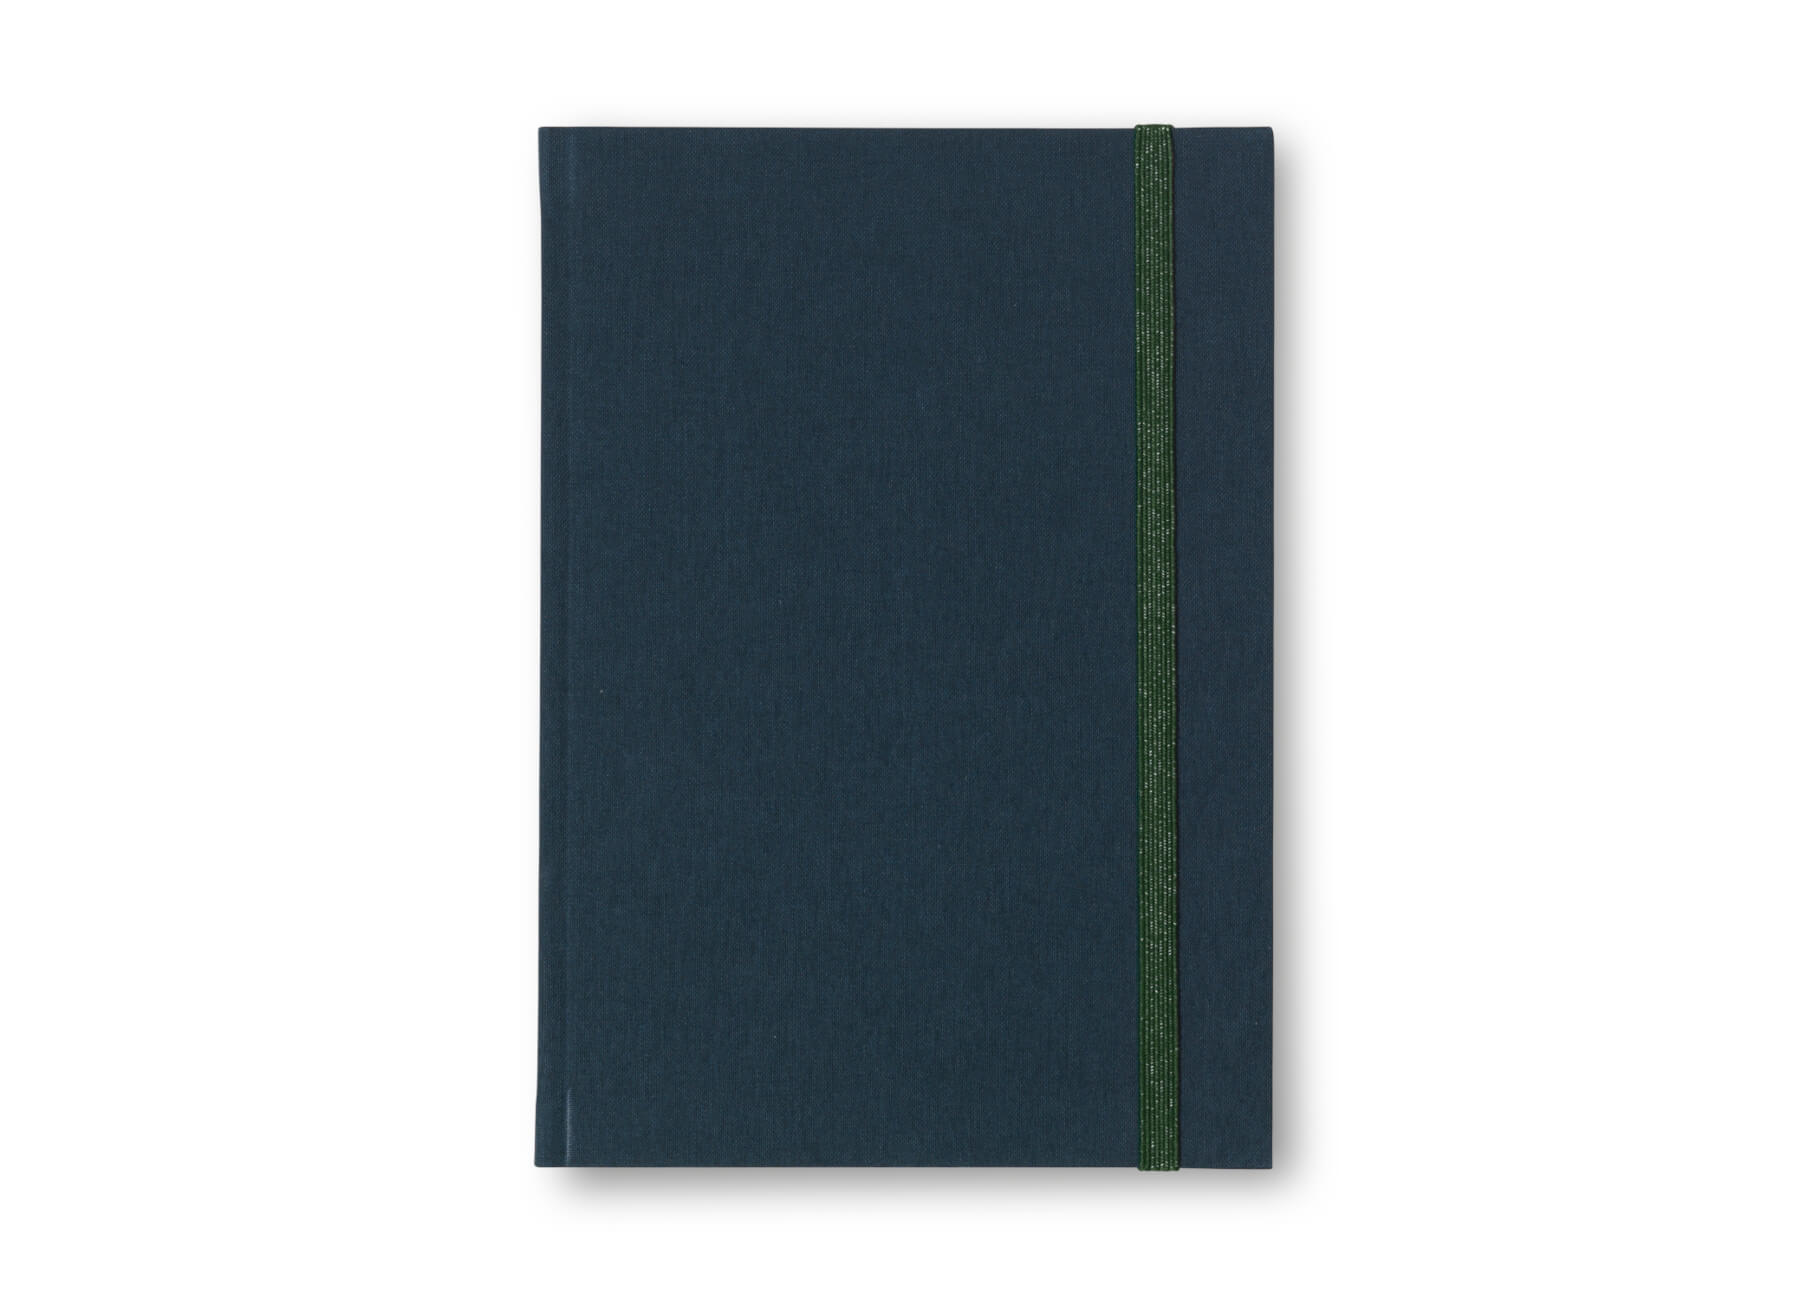 BEA | Medium Notebook with band | Dark Blue | Ruled | by Notem Studio - Lifestory - Notem Studio